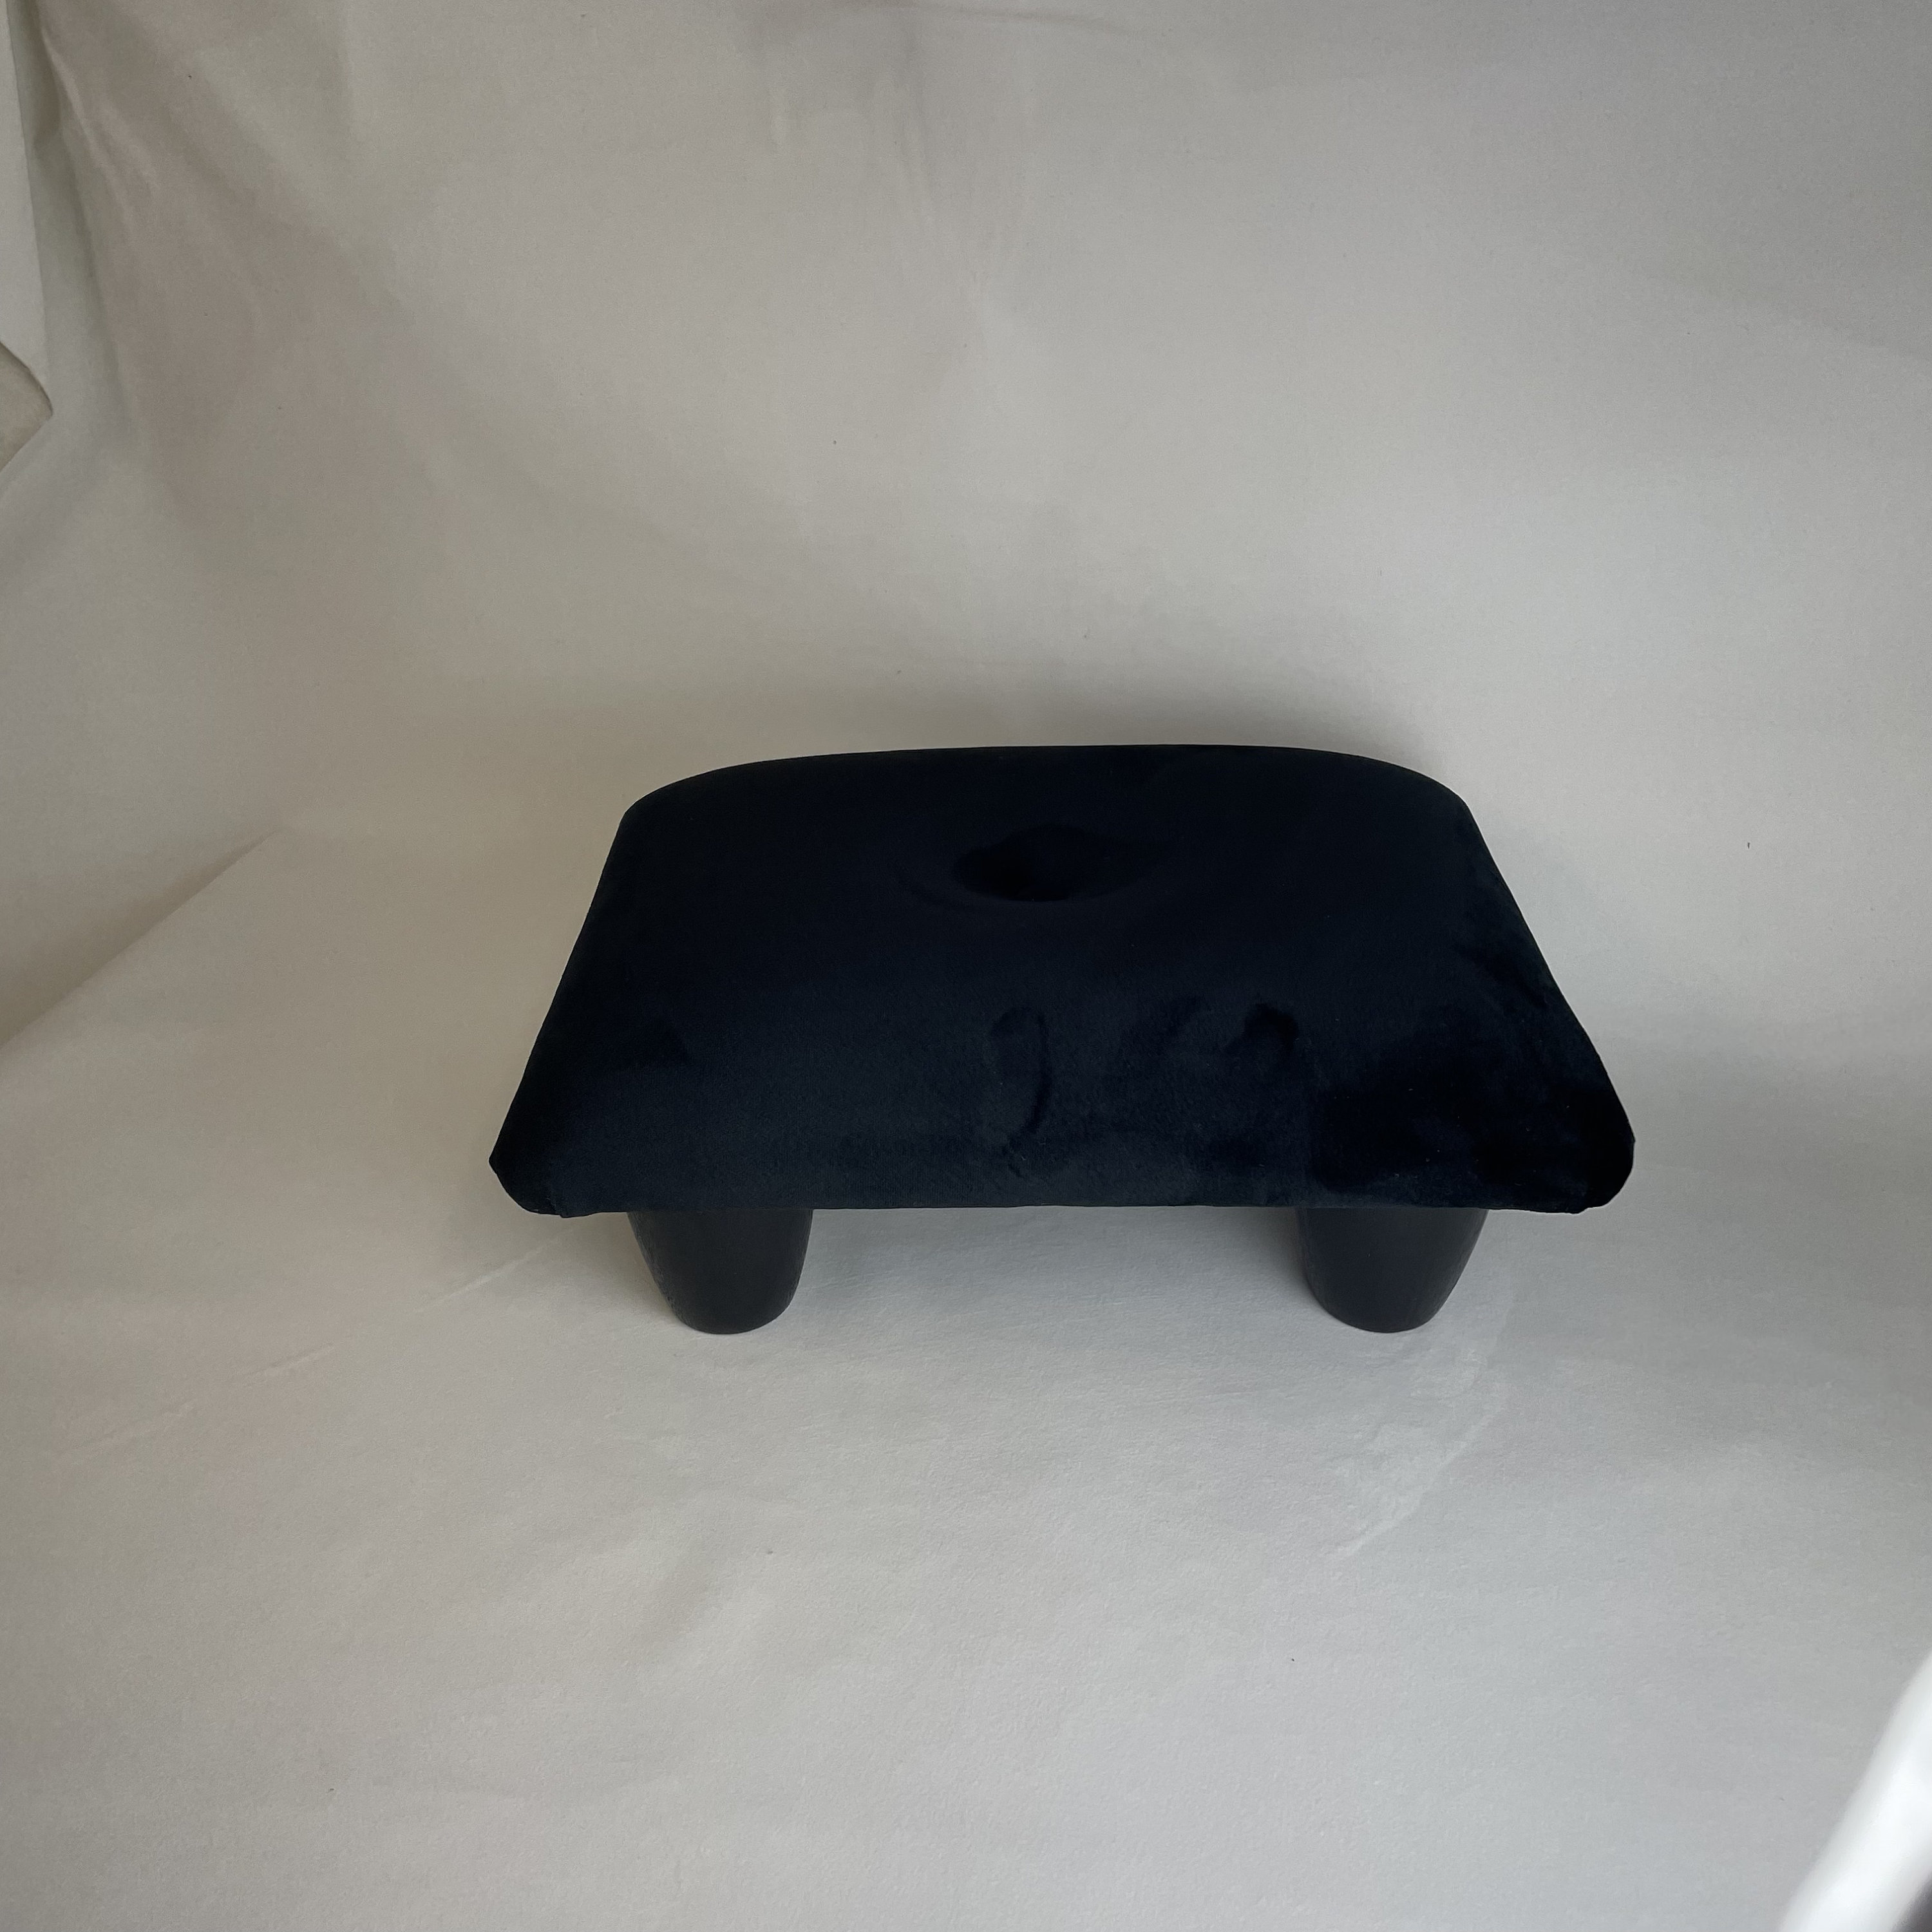 Mini Footstool Pouffe Plush Velvet Black Stool Foot Rest Under Desk Foot  Rest Small Buttoned Ottoman Black Pouffe 16 Cm 